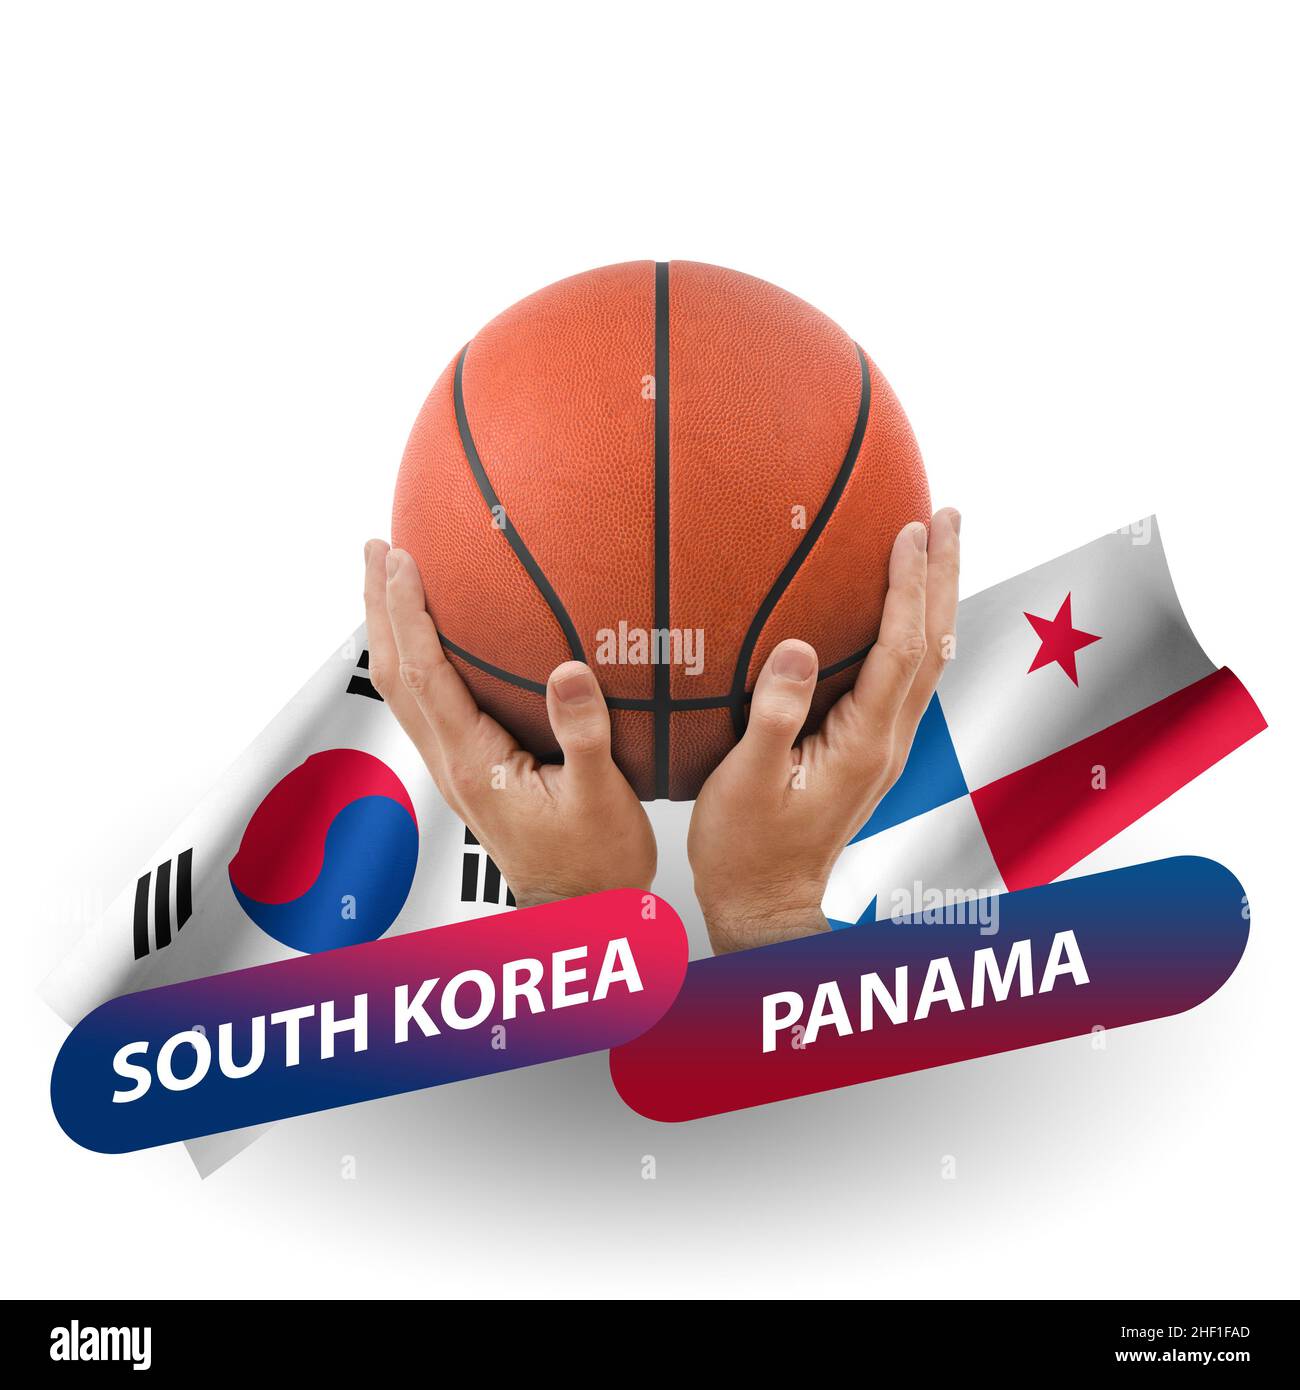 South Korea Vs Panama Hi Res Stock Photography And Images Alamy